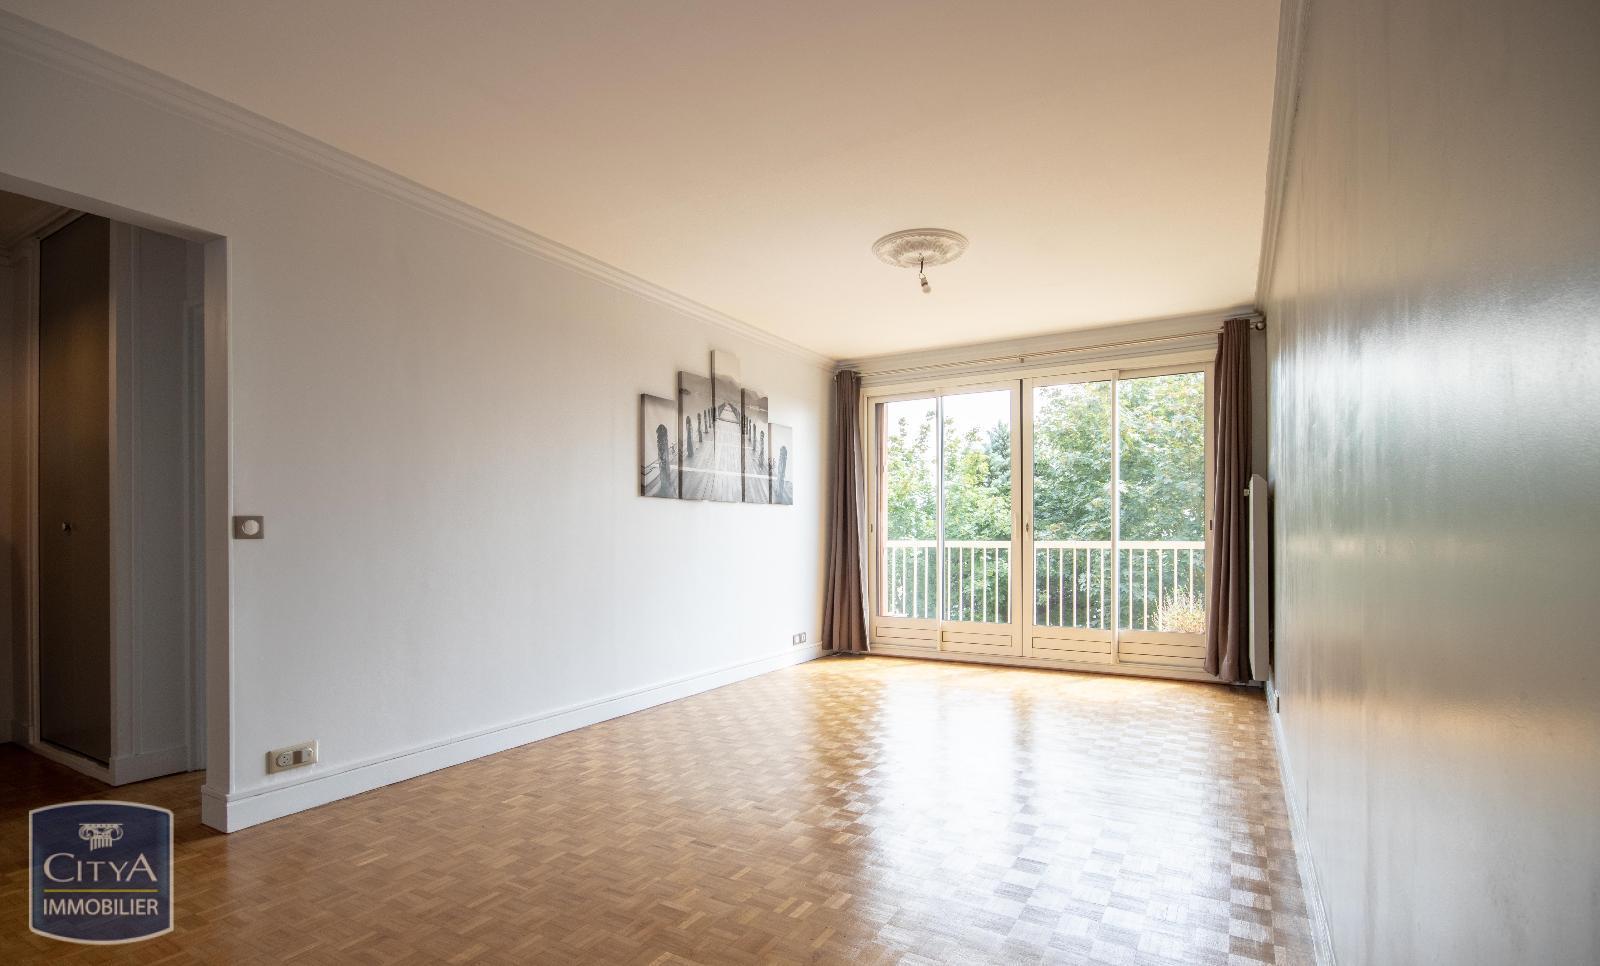 Appartement a louer herblay - 3 pièce(s) - 68.42 m2 - Surfyn